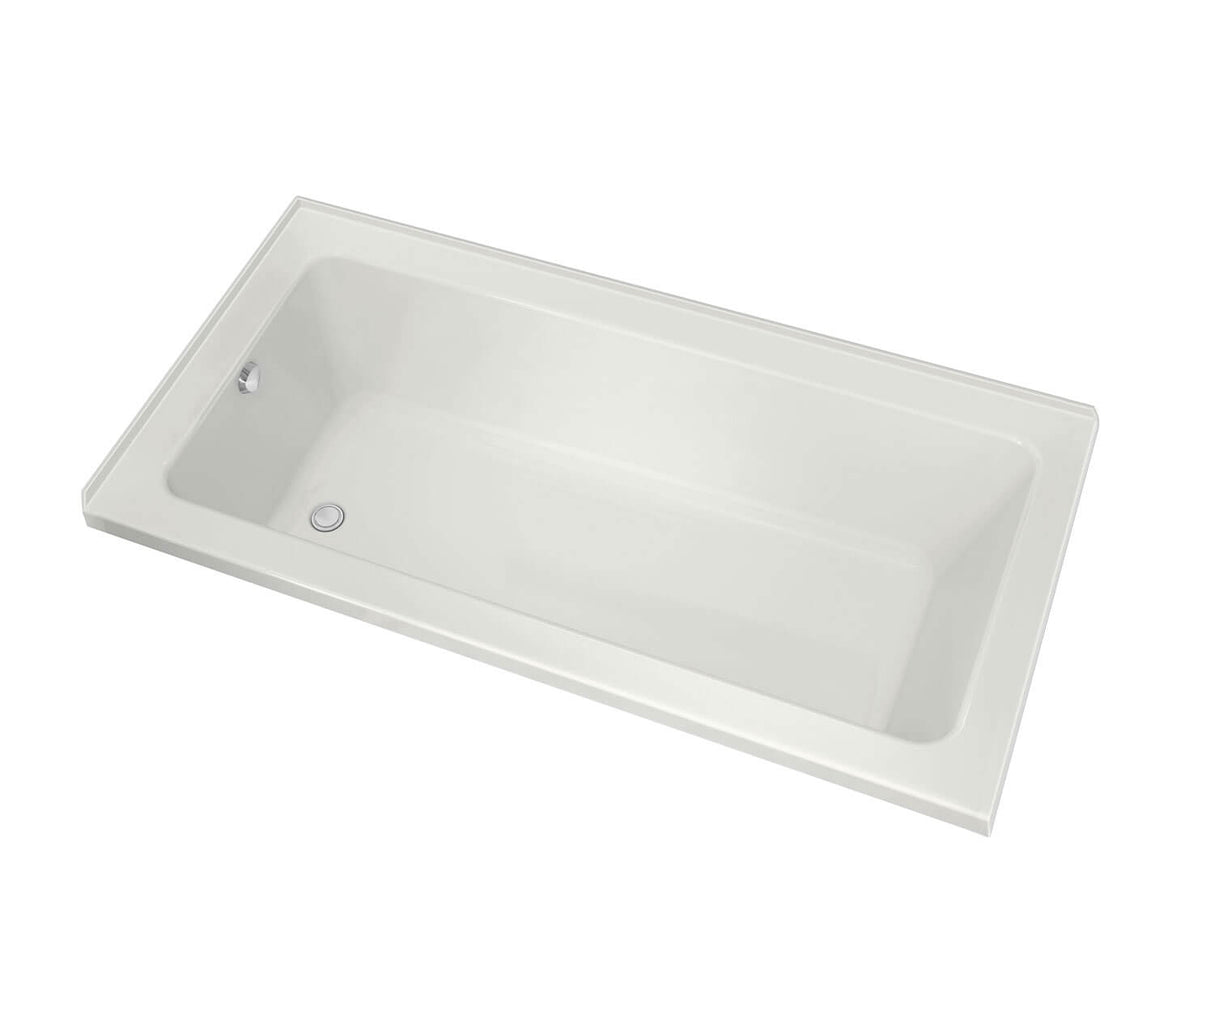 MAAX 106199-000-001-105 Pose Acrylic Corner Left Left-Hand Drain Bathtub in White